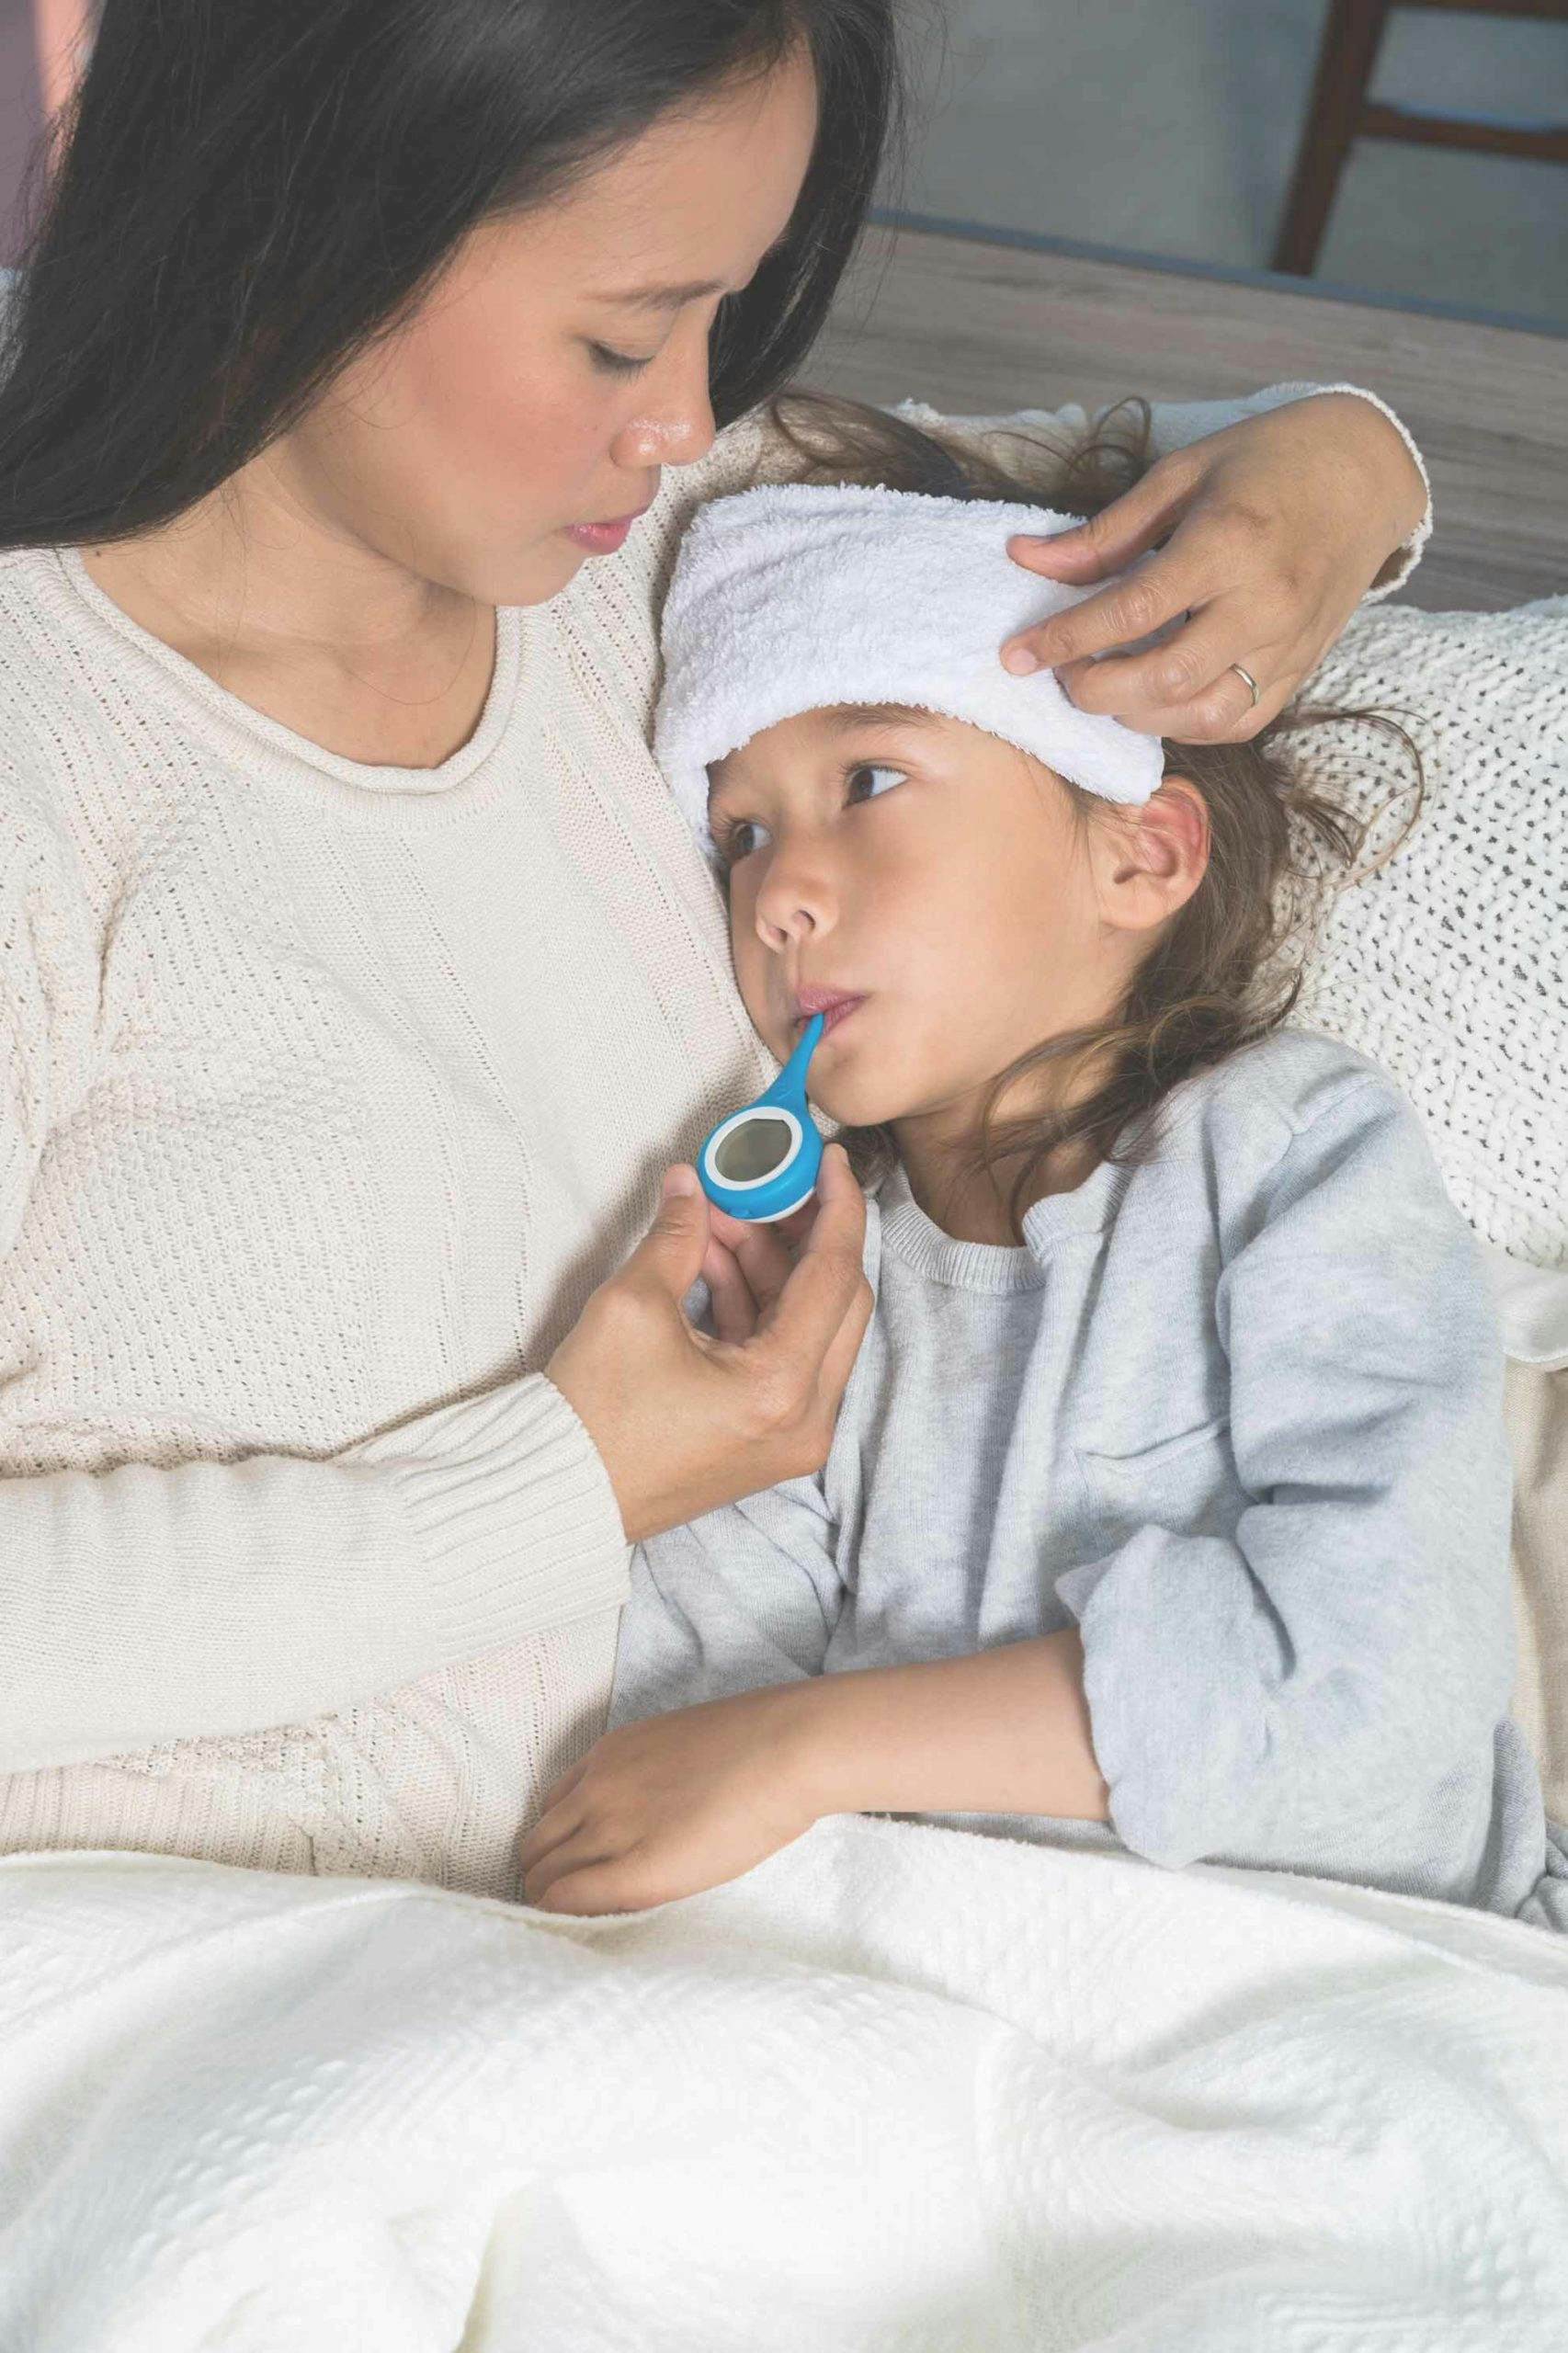 Women taking a child's temperature